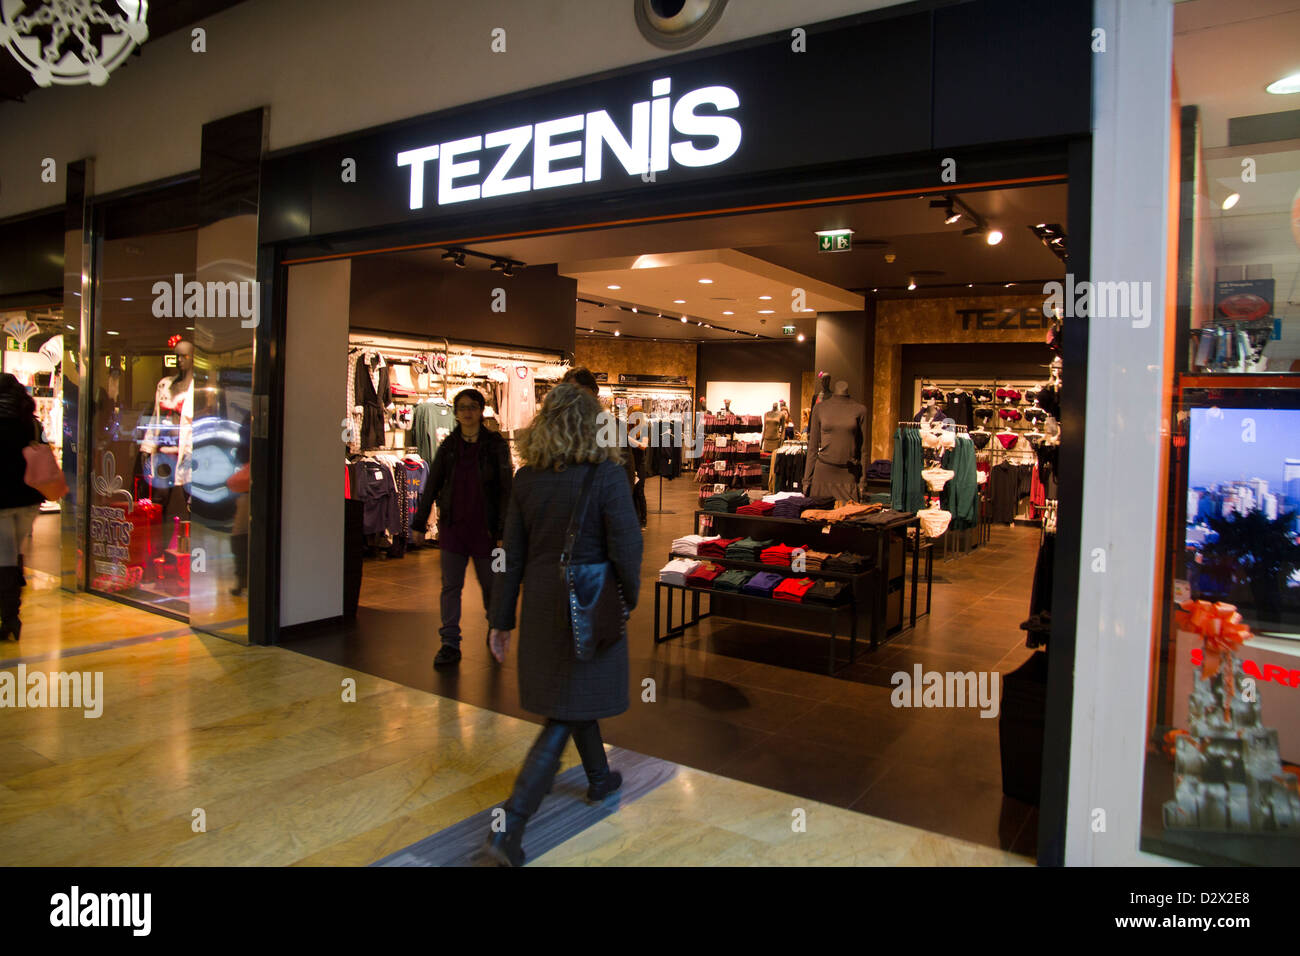 Tezenis underwear store shopping Spain Stock Photo - Alamy